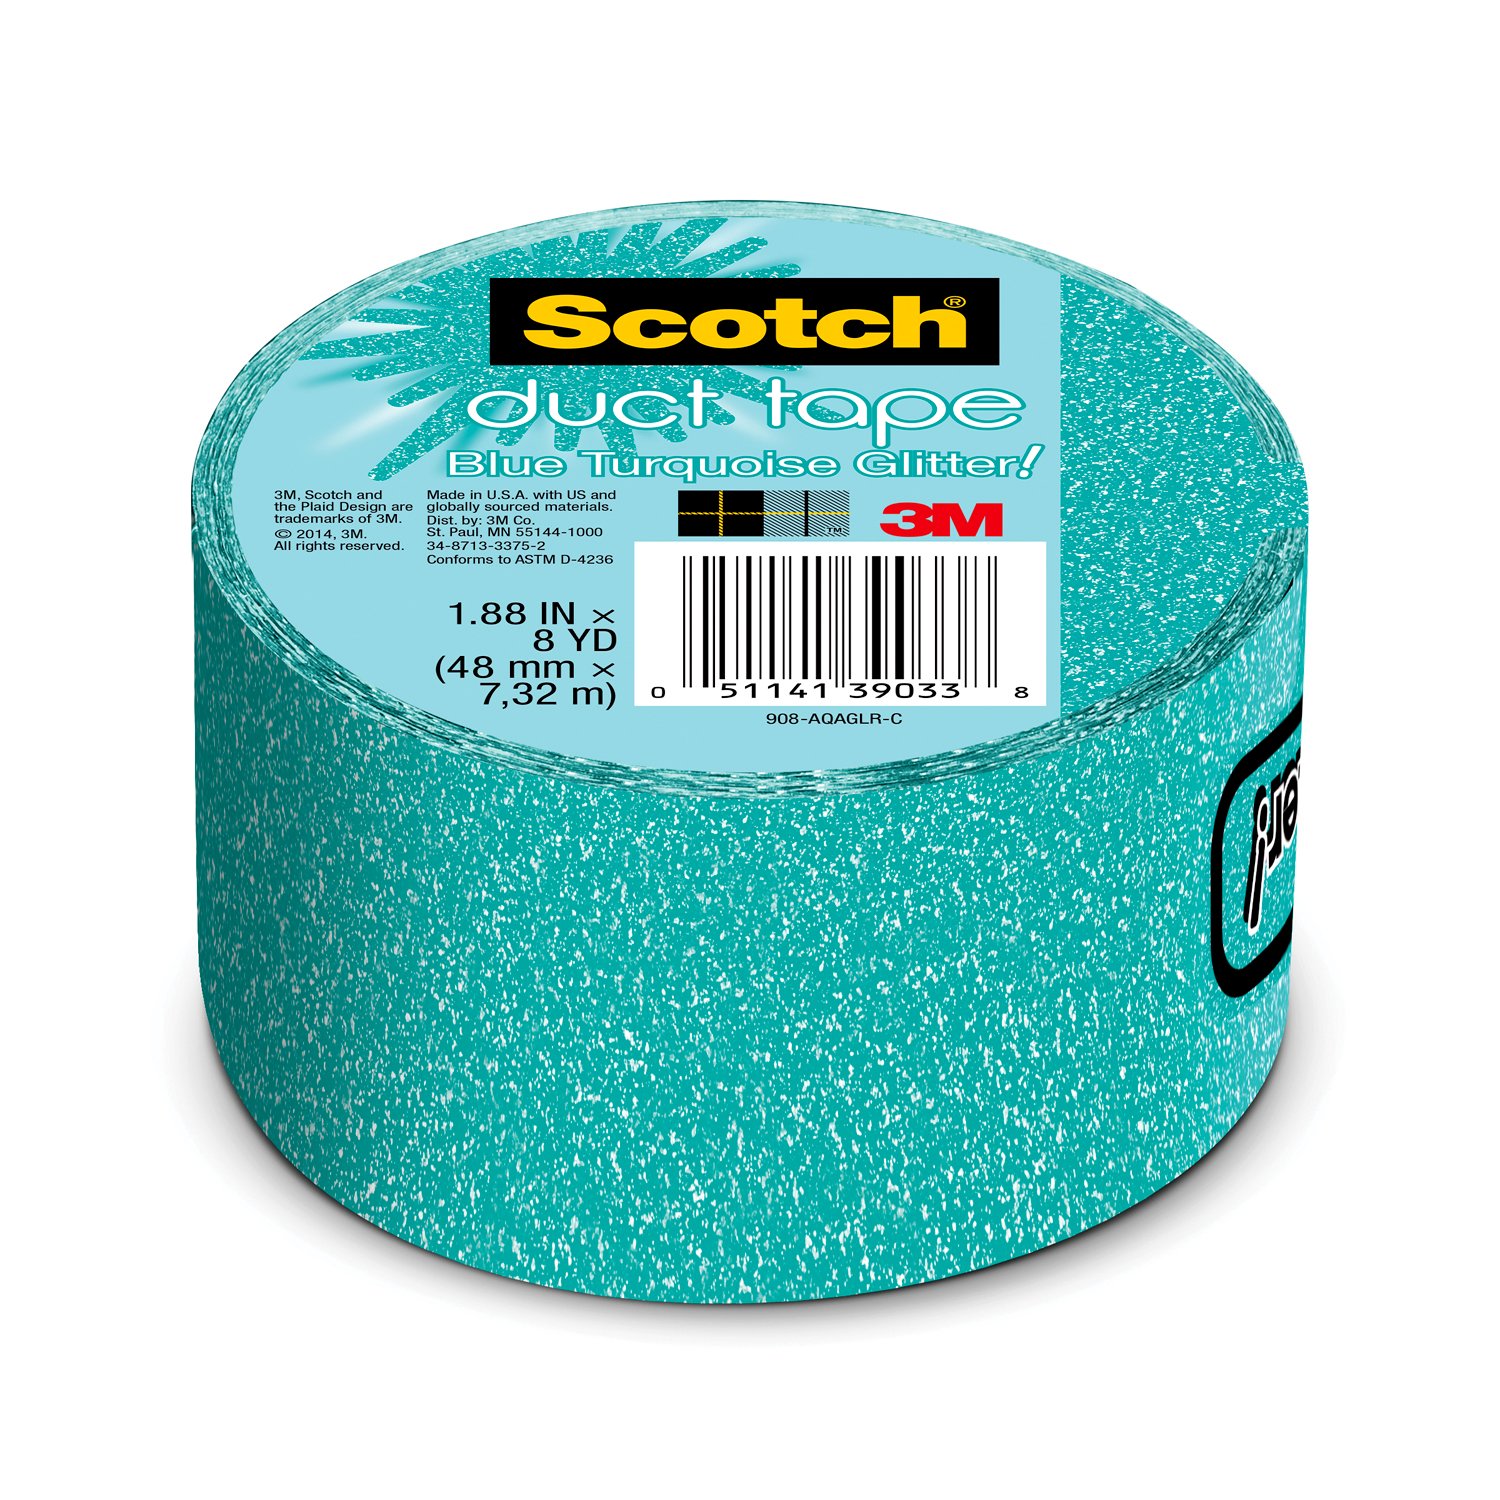 7100112847 - Scotch Duct Tape, 908-AQGL-ESF, 1.88 in x 8 yd (48 mm x 7,32 m)